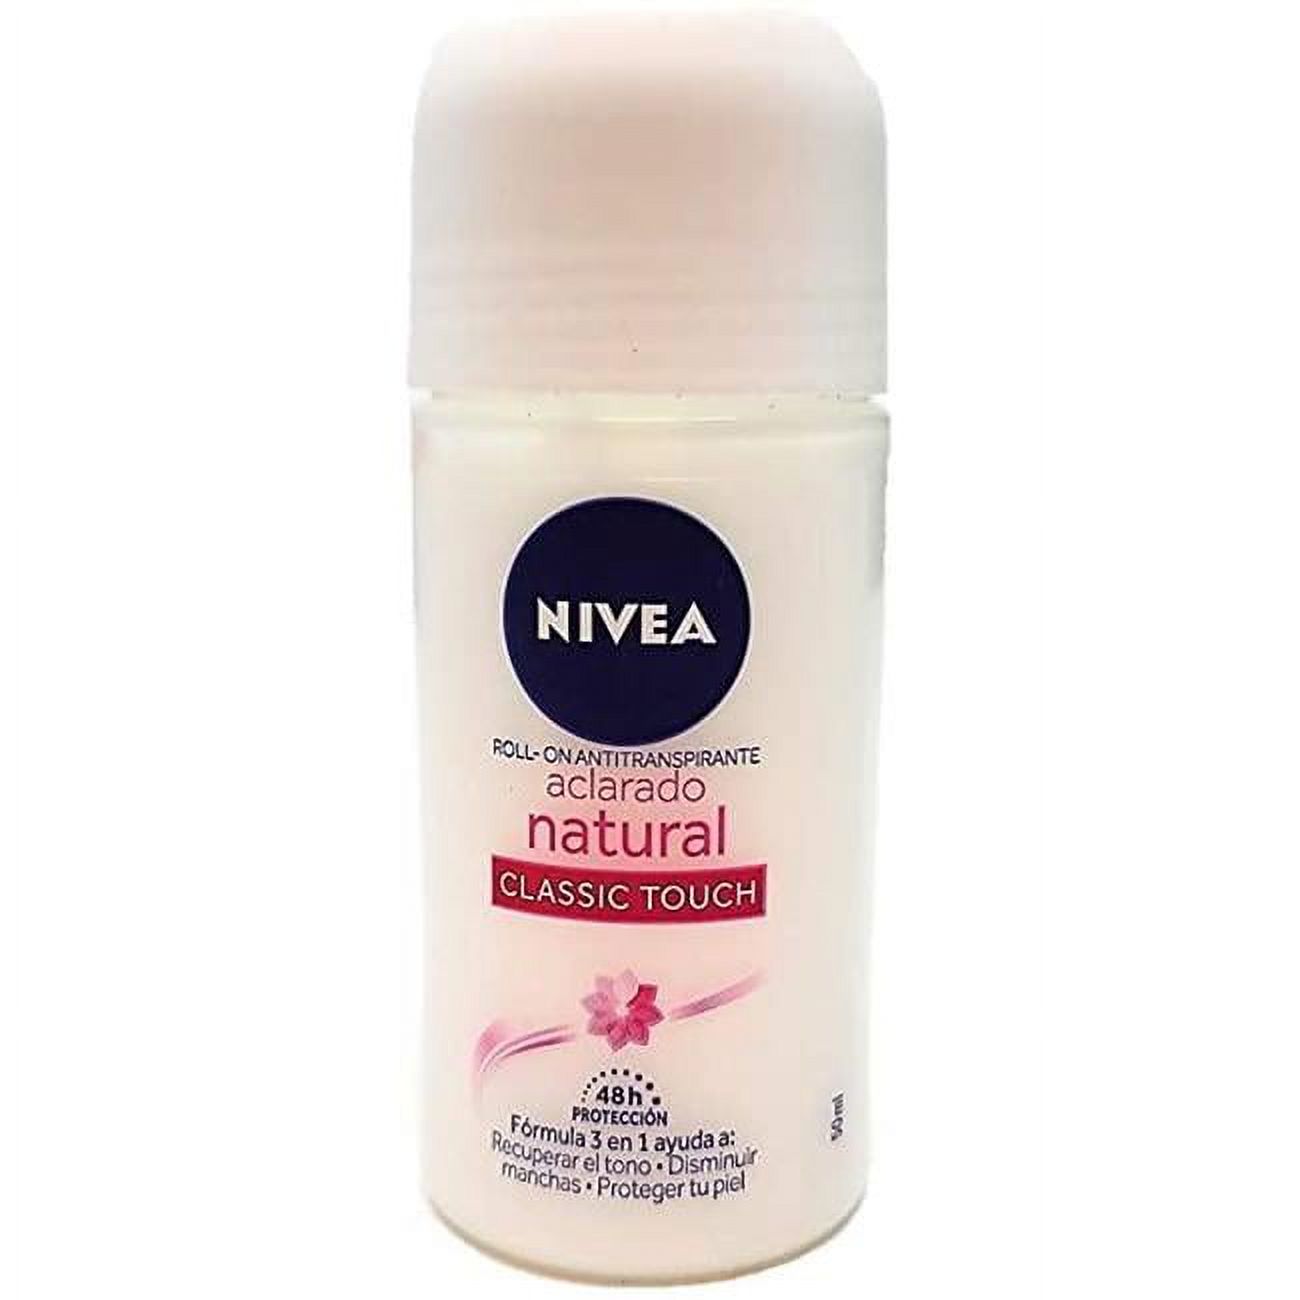 Nivea 4005808837472 50 ml Aclarado Natural Roll On Deodorant for Women - image 1 of 5